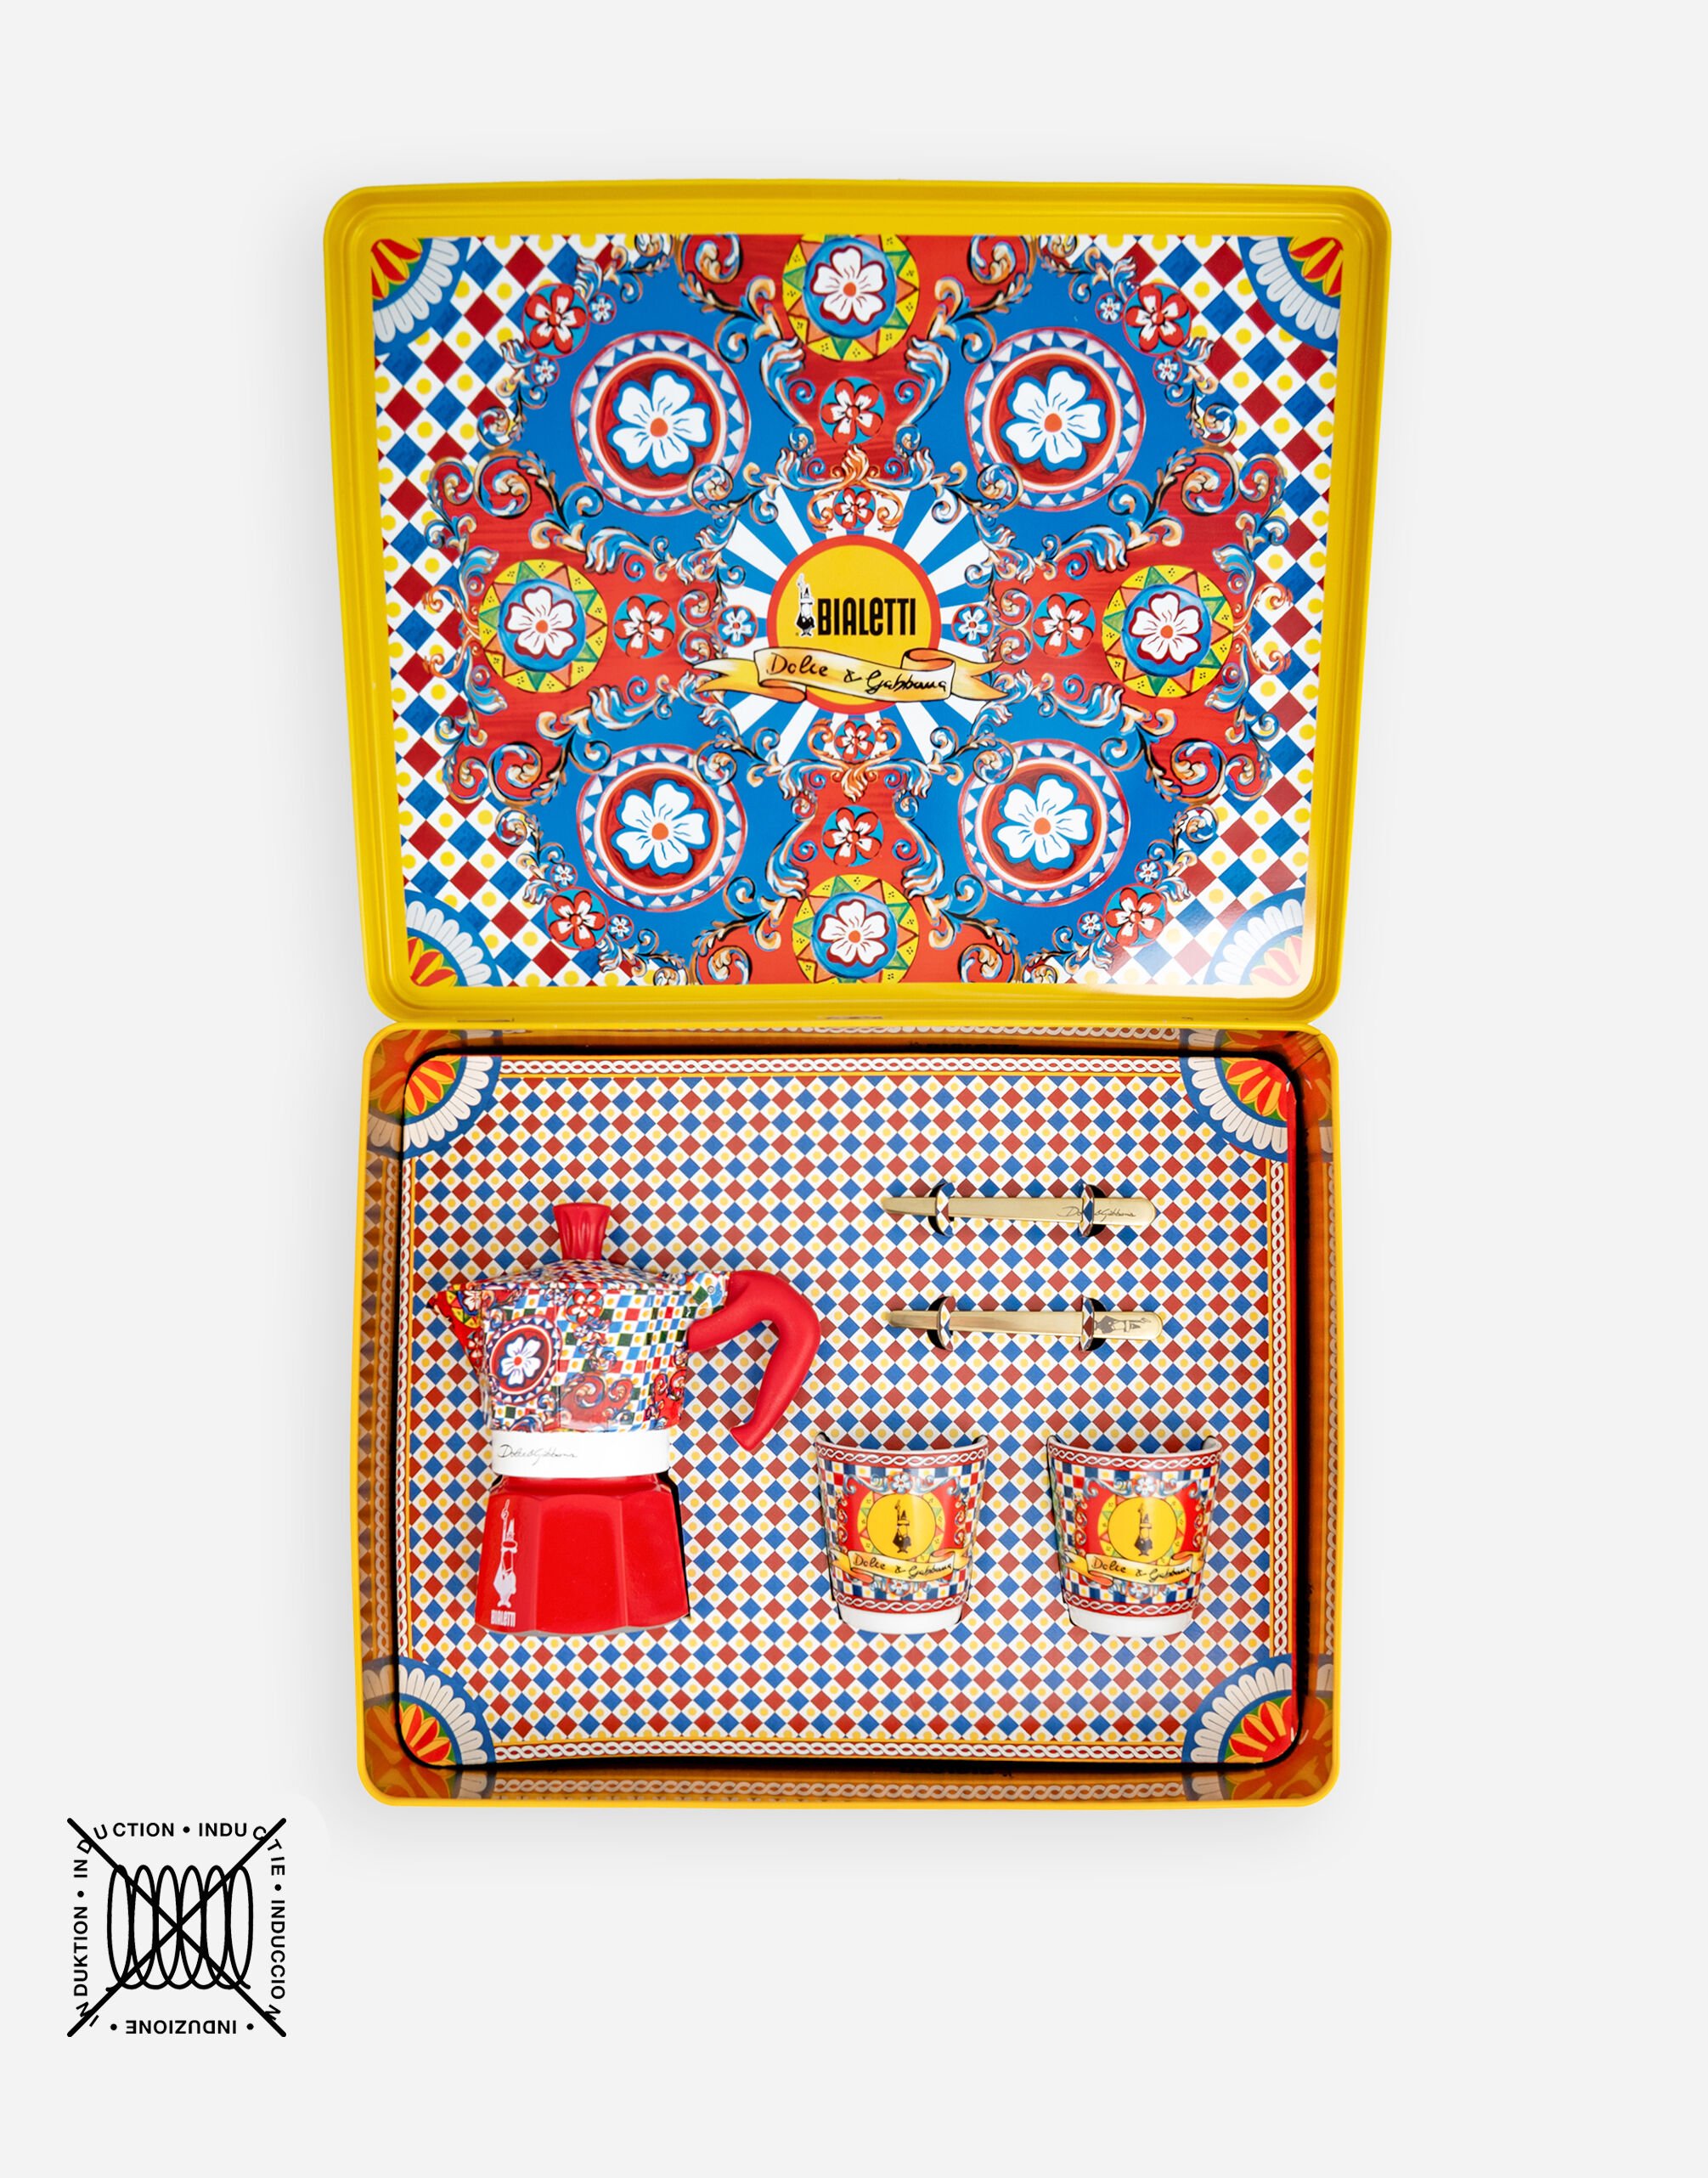 Dolce & Gabbana صندوق آلة موكا صغيرة + 2 كوب بورسلين و2 مقلابة ذهبية BIALETTI DOLCE&GABBANA متعدد الألوان TCK014TCAFM